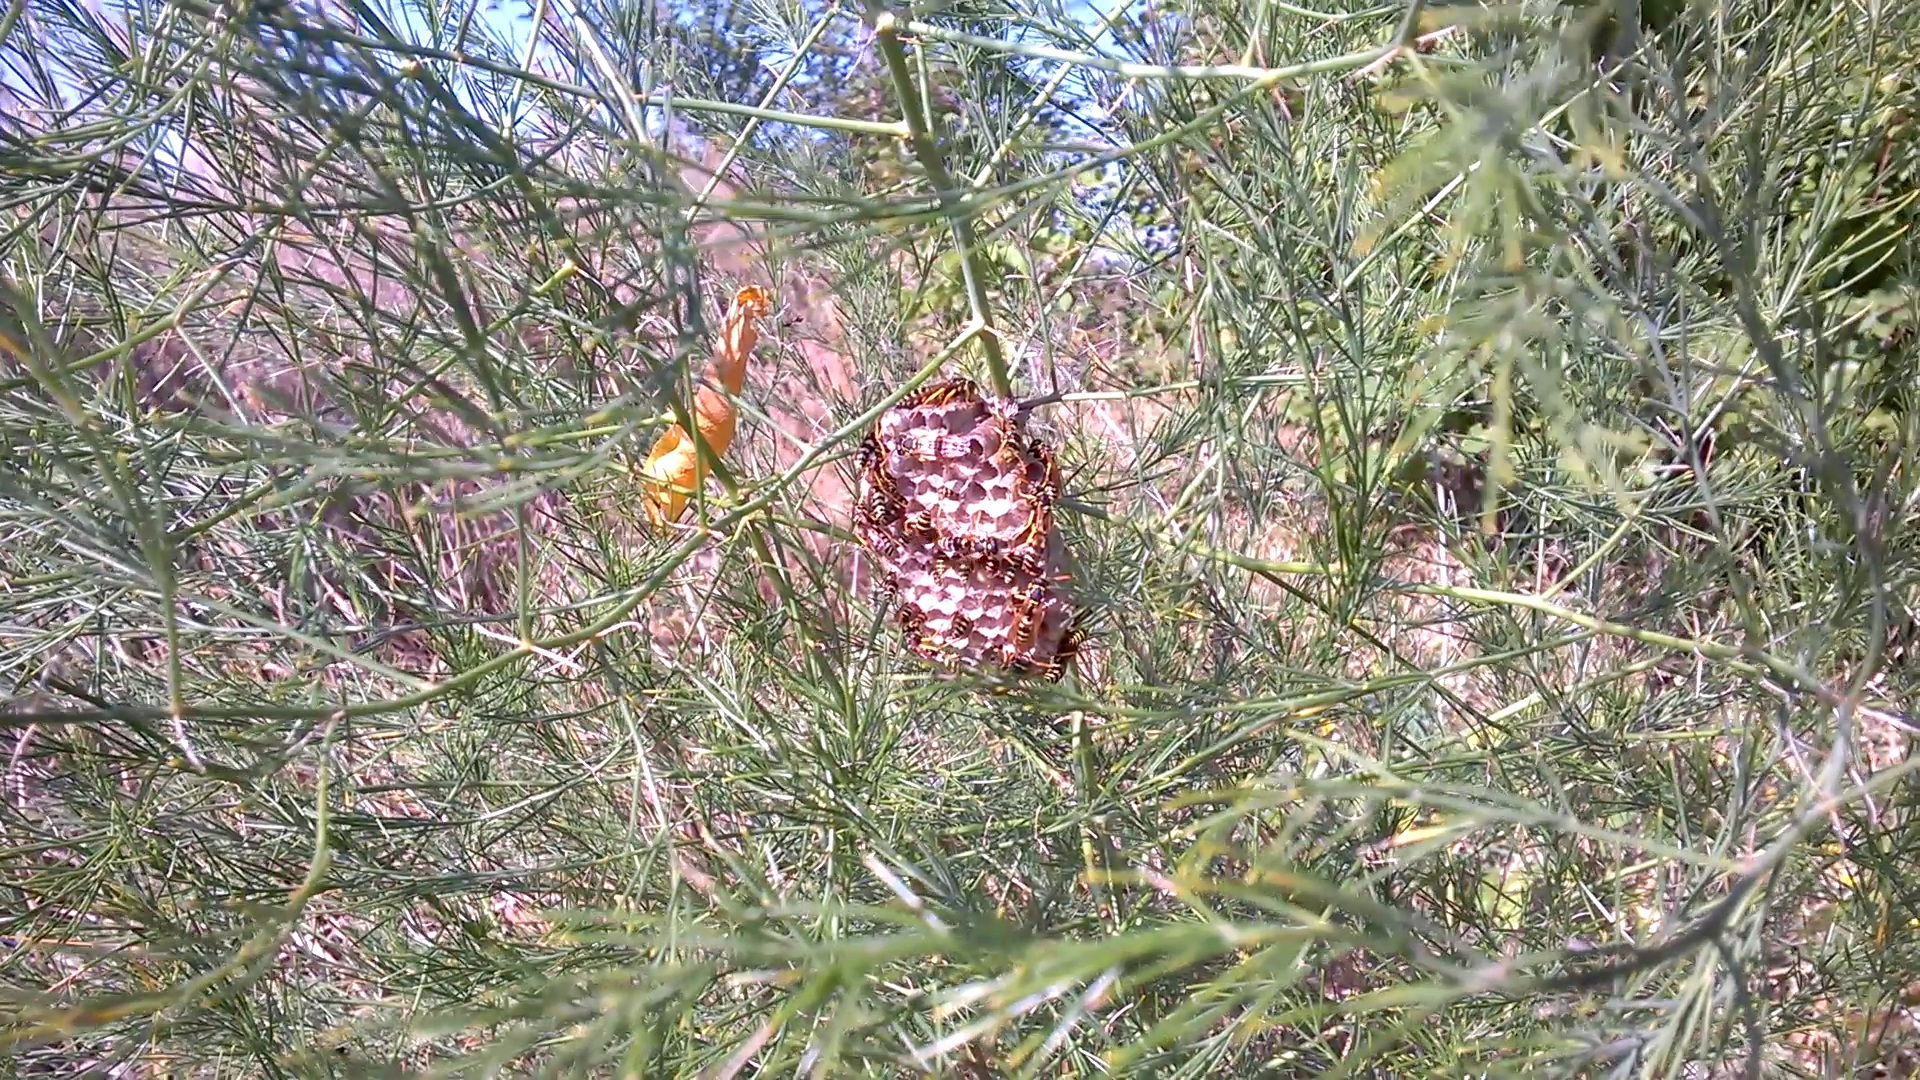 Осиное гнездо на стебле растения. Nest of wasps on stalk of plant